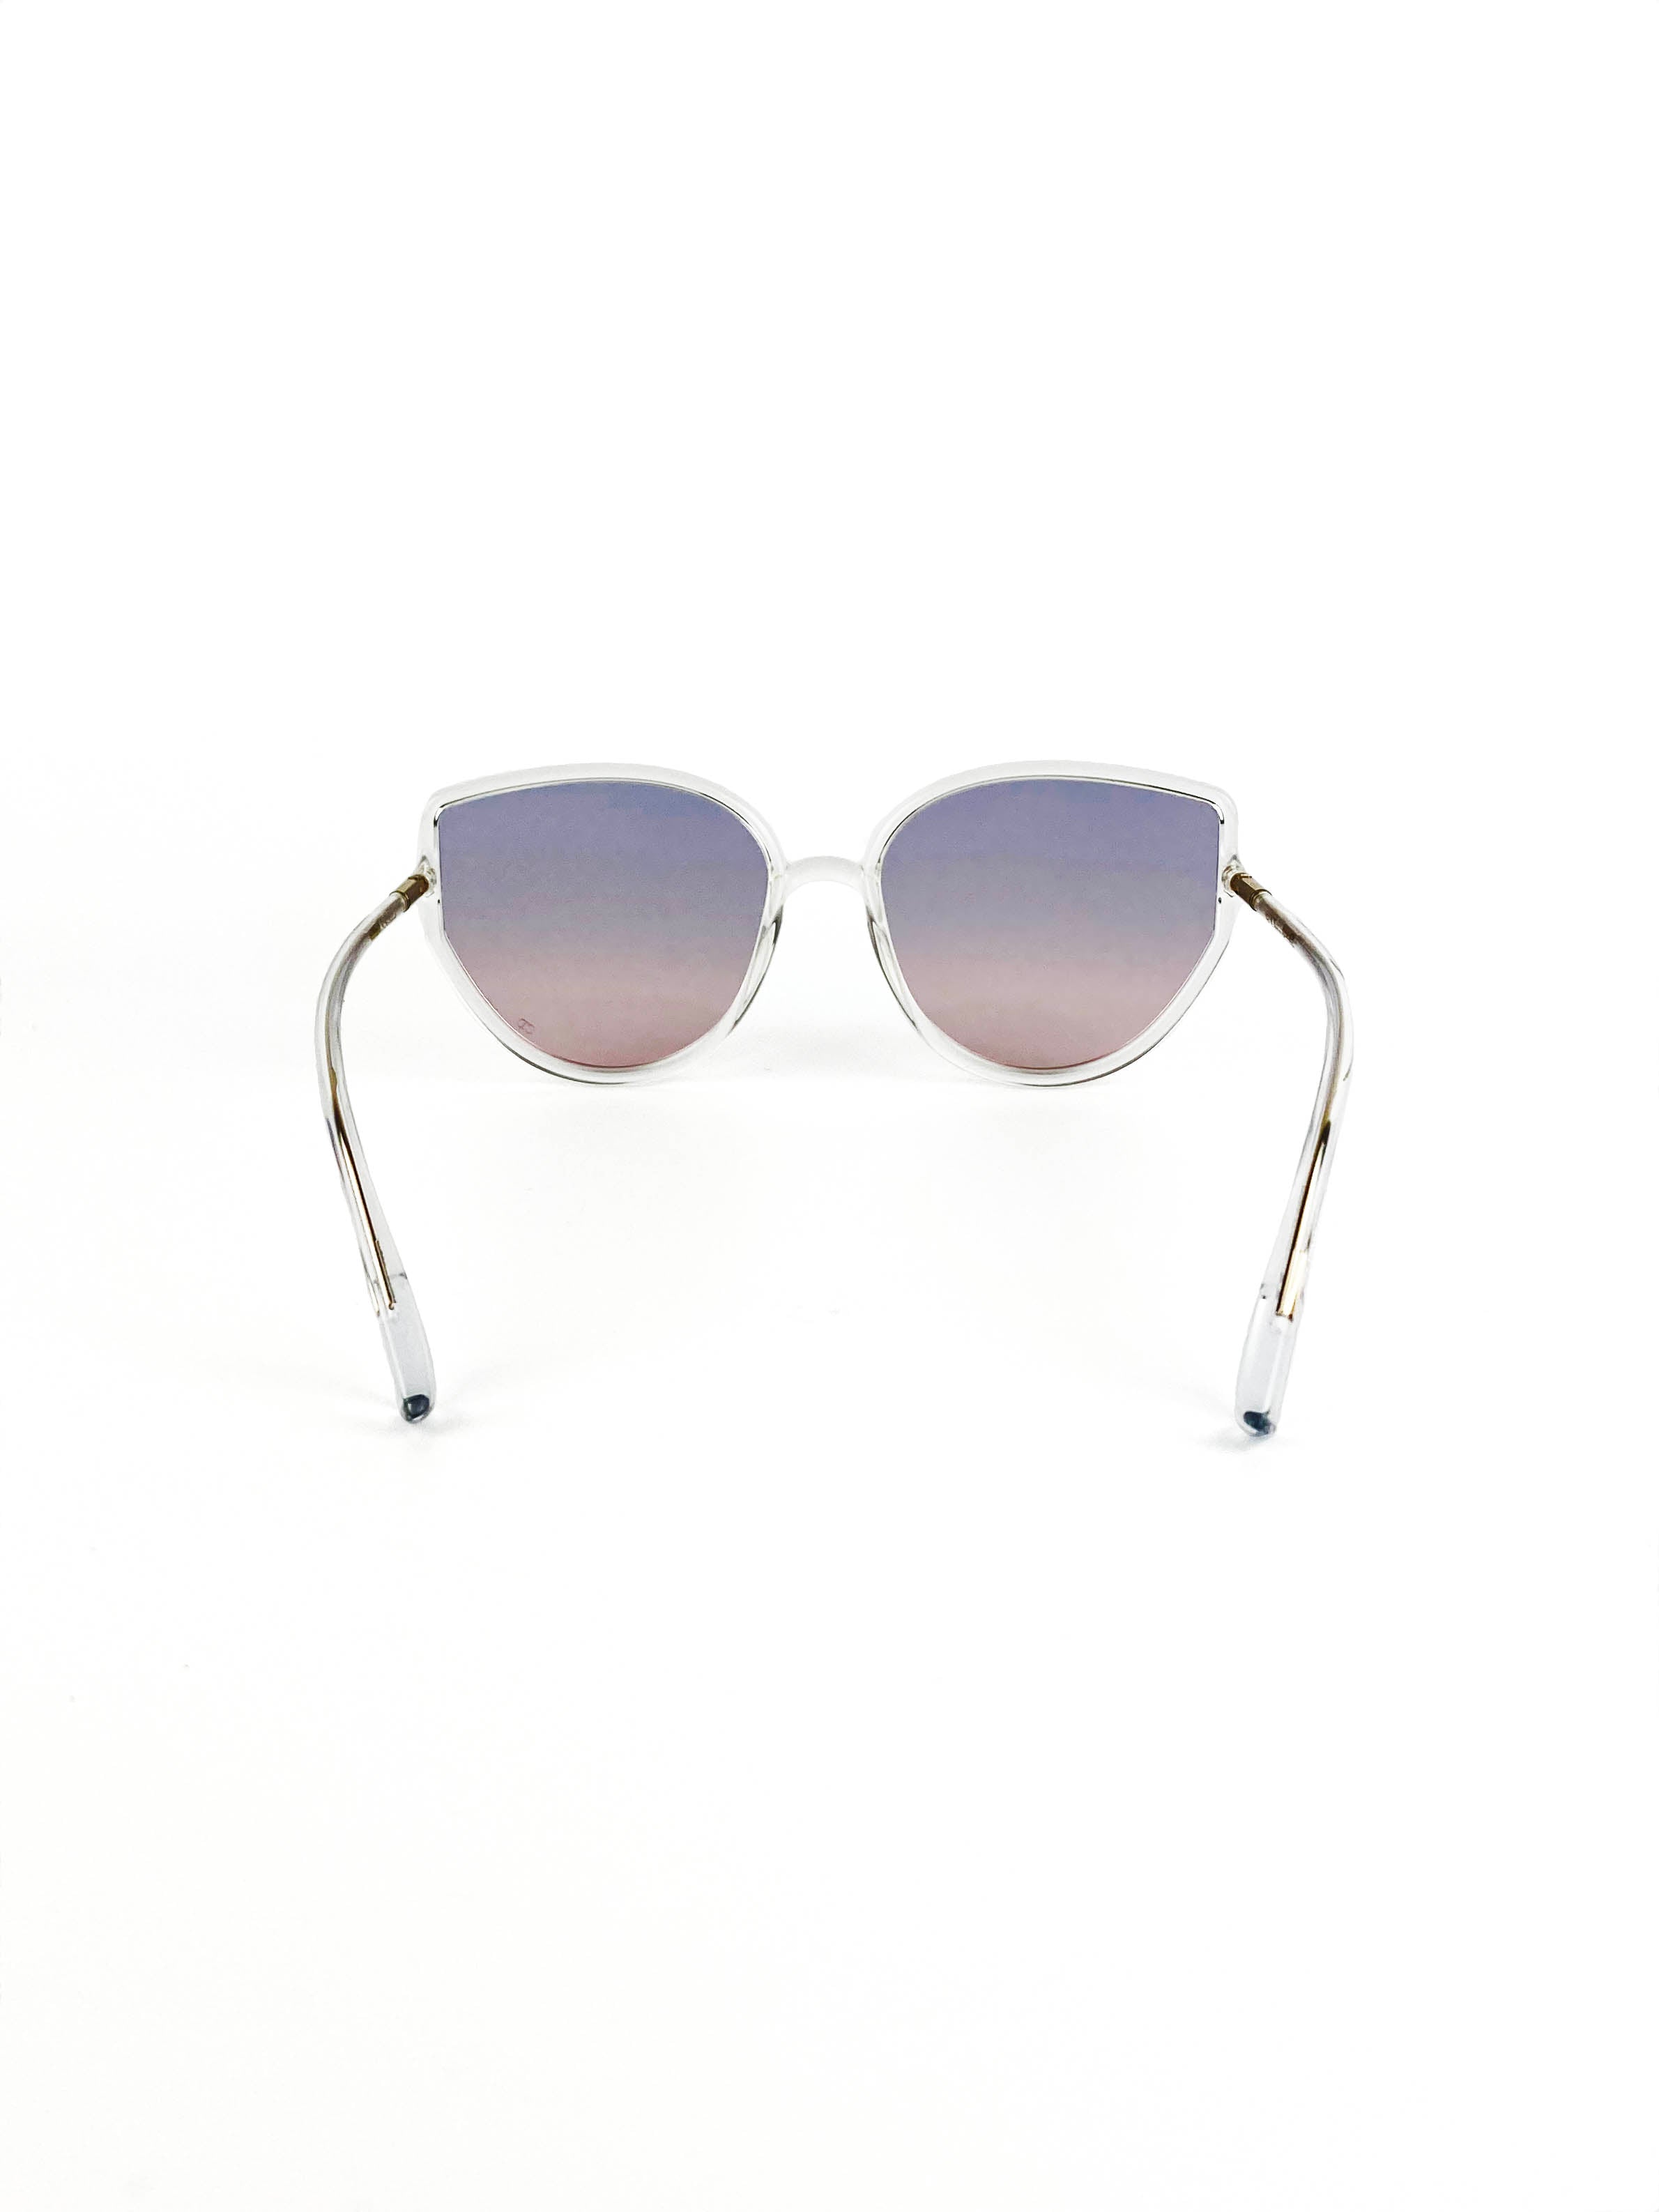 Dior Crystal/Purple Rose So Stellaire Sunglasses